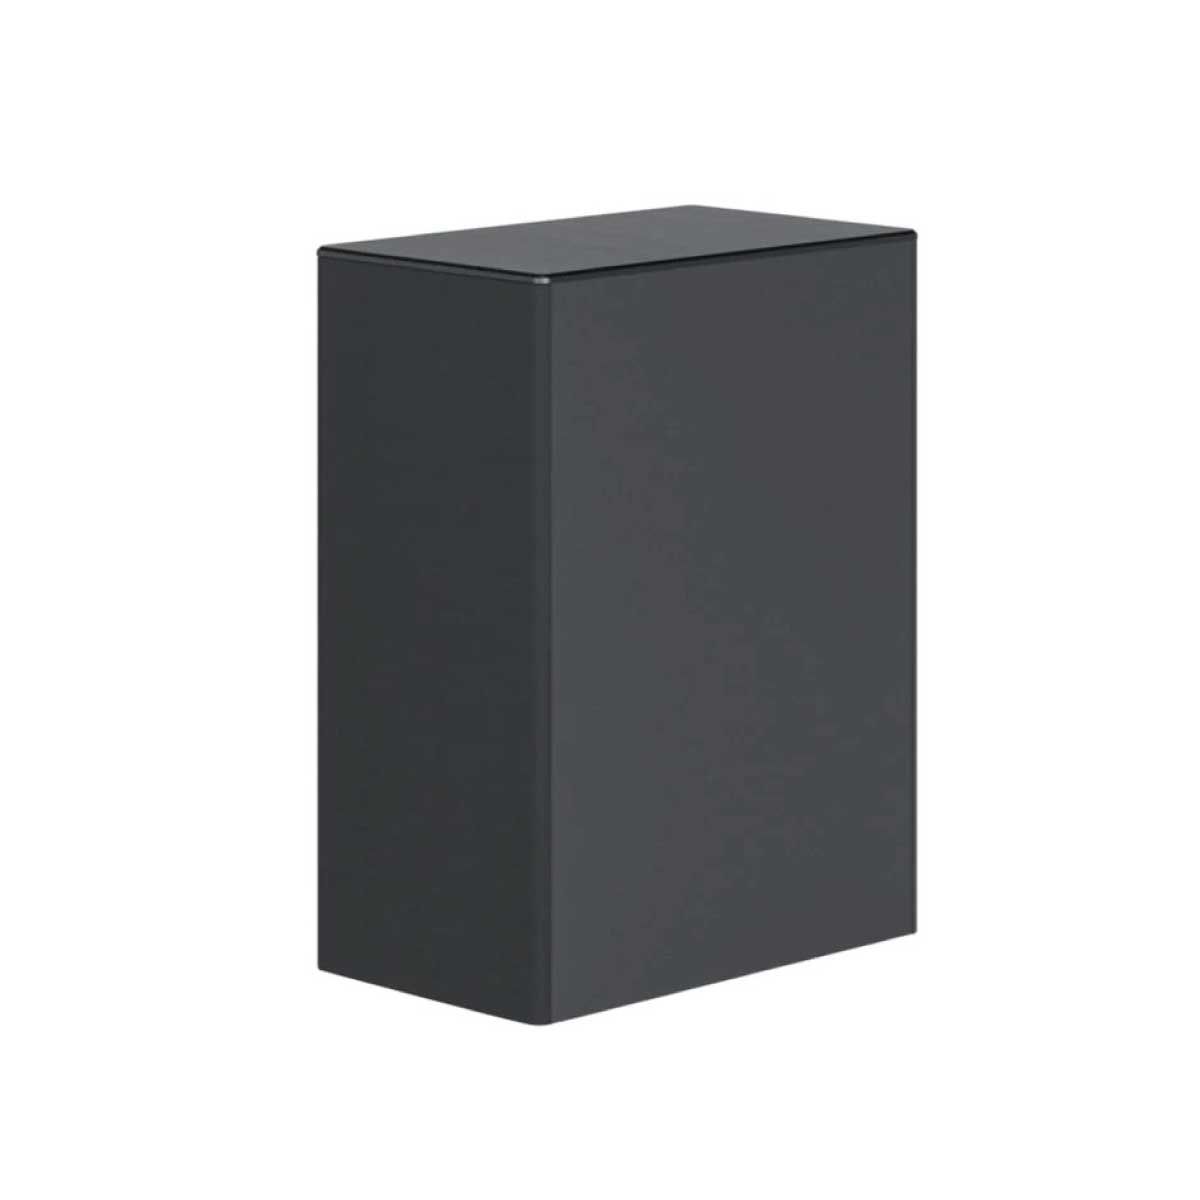 LG Soundbar Speakers 3.1.2ch 380W รุ่น S75Q Surround Sound meridian